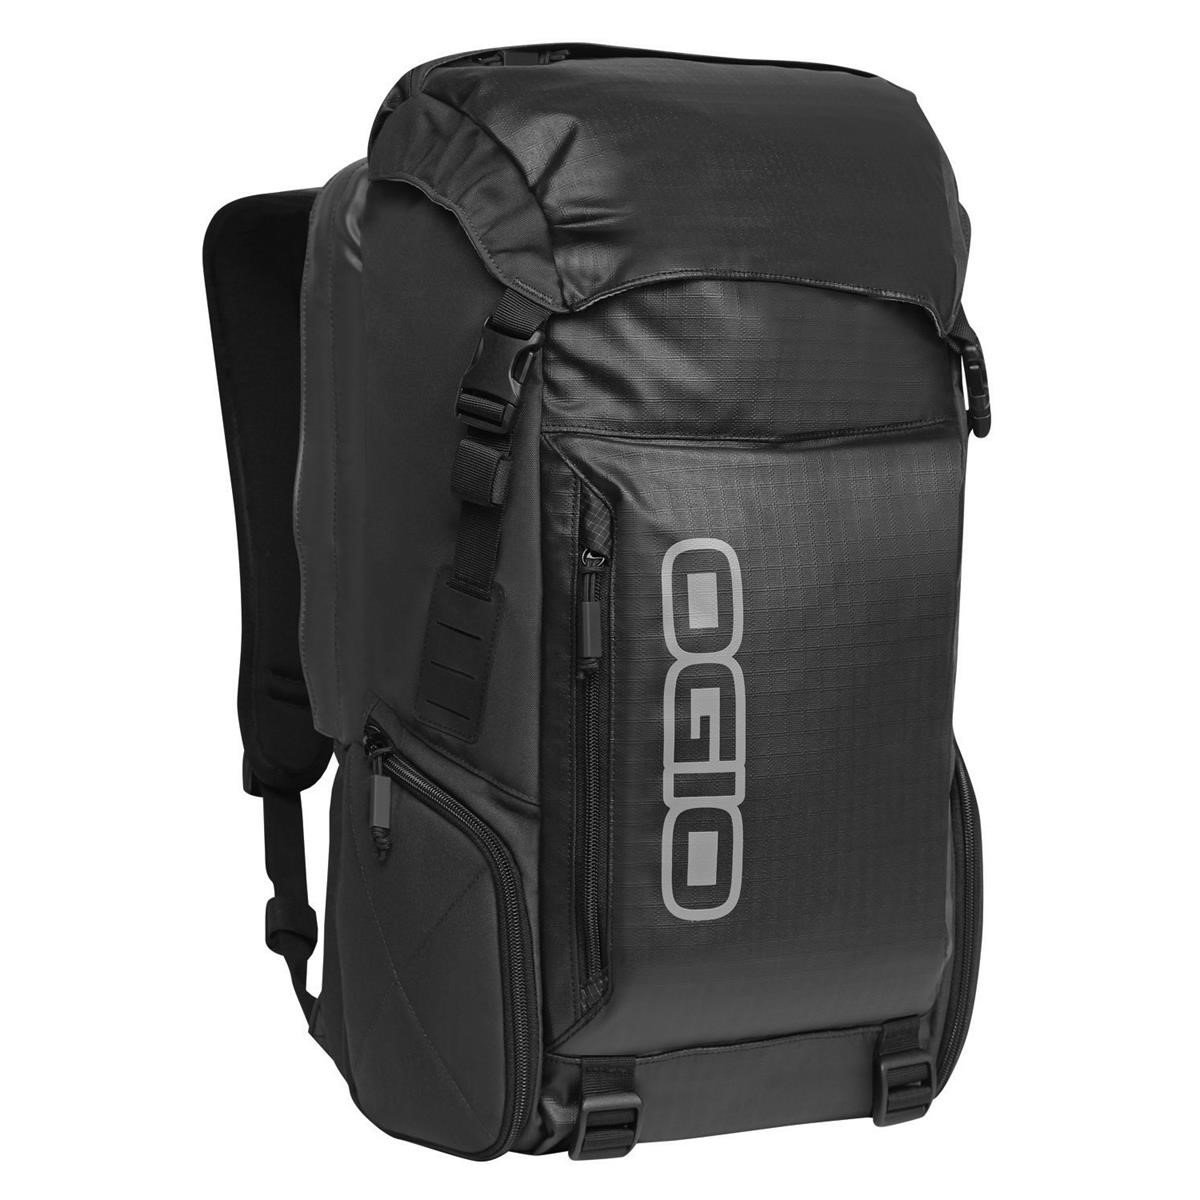 Ogio Backpack Throttle Stealth/Black, 27 Liter